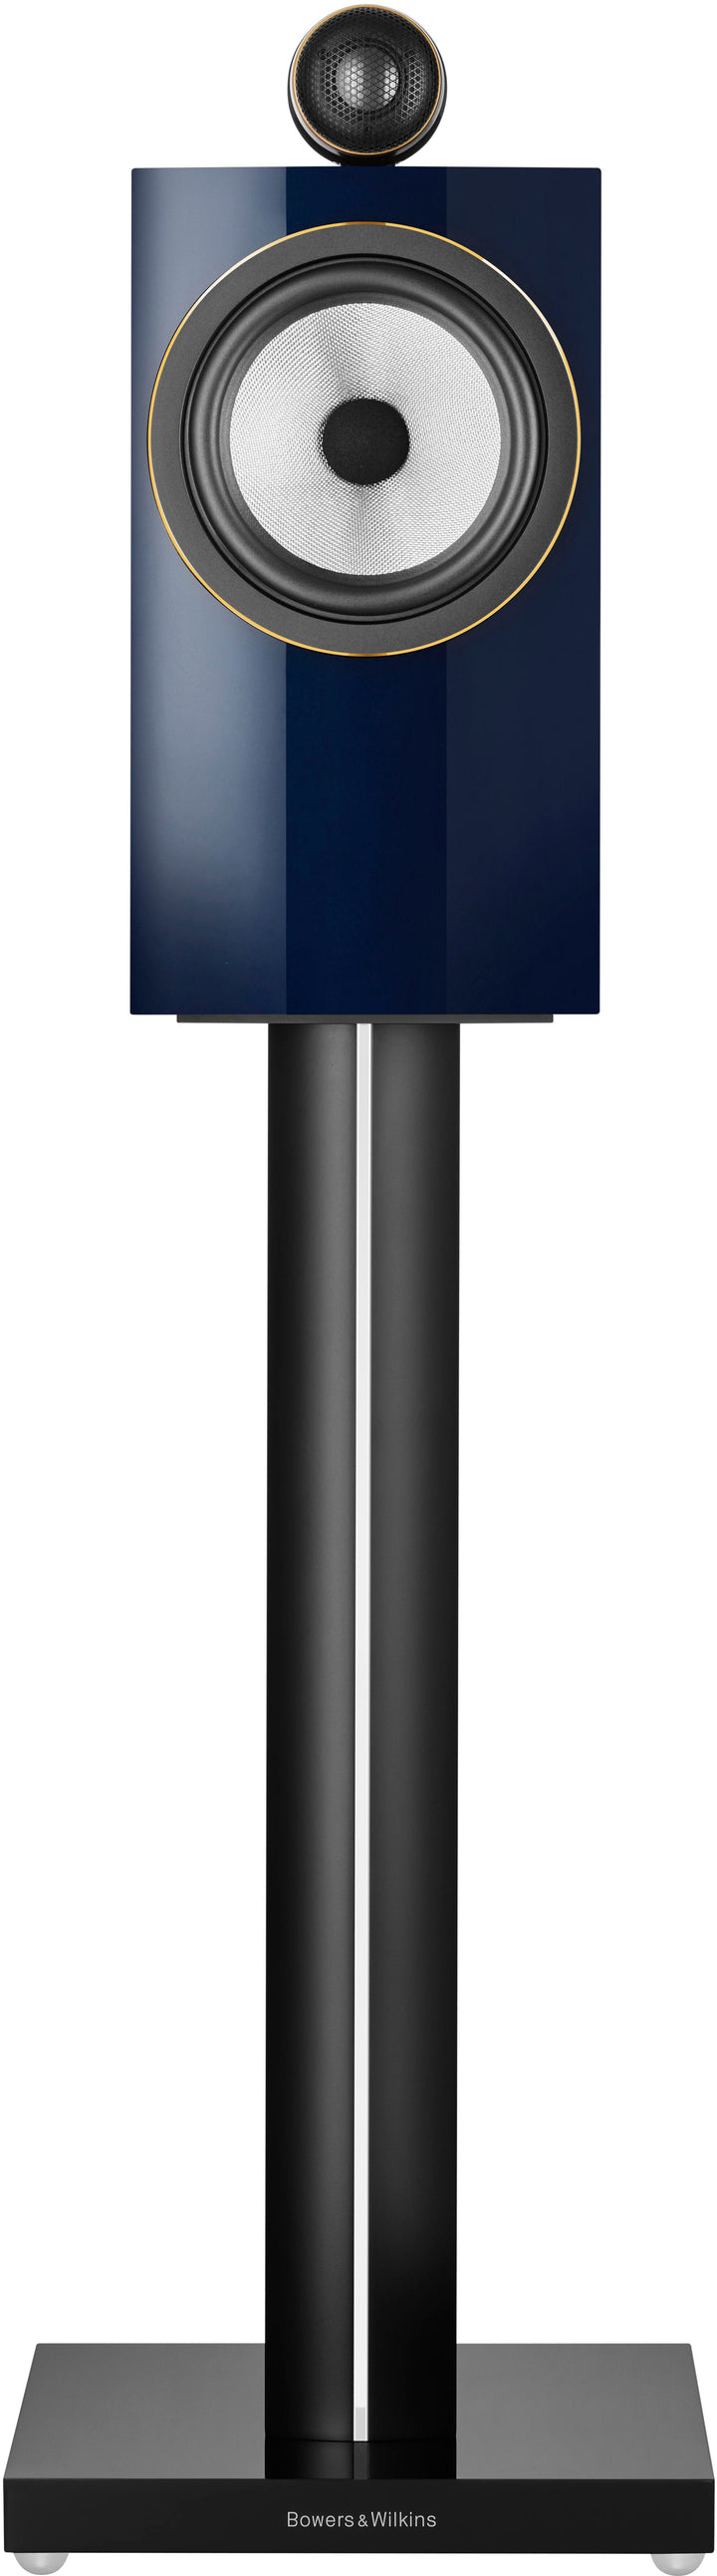 Bowers & Wilkins - 700 Series 3 Signature Bookshelf Speaker with 1" Tweeter on Top and 6.5" Midbass (Pair) - Metallic Midnight Blue_3